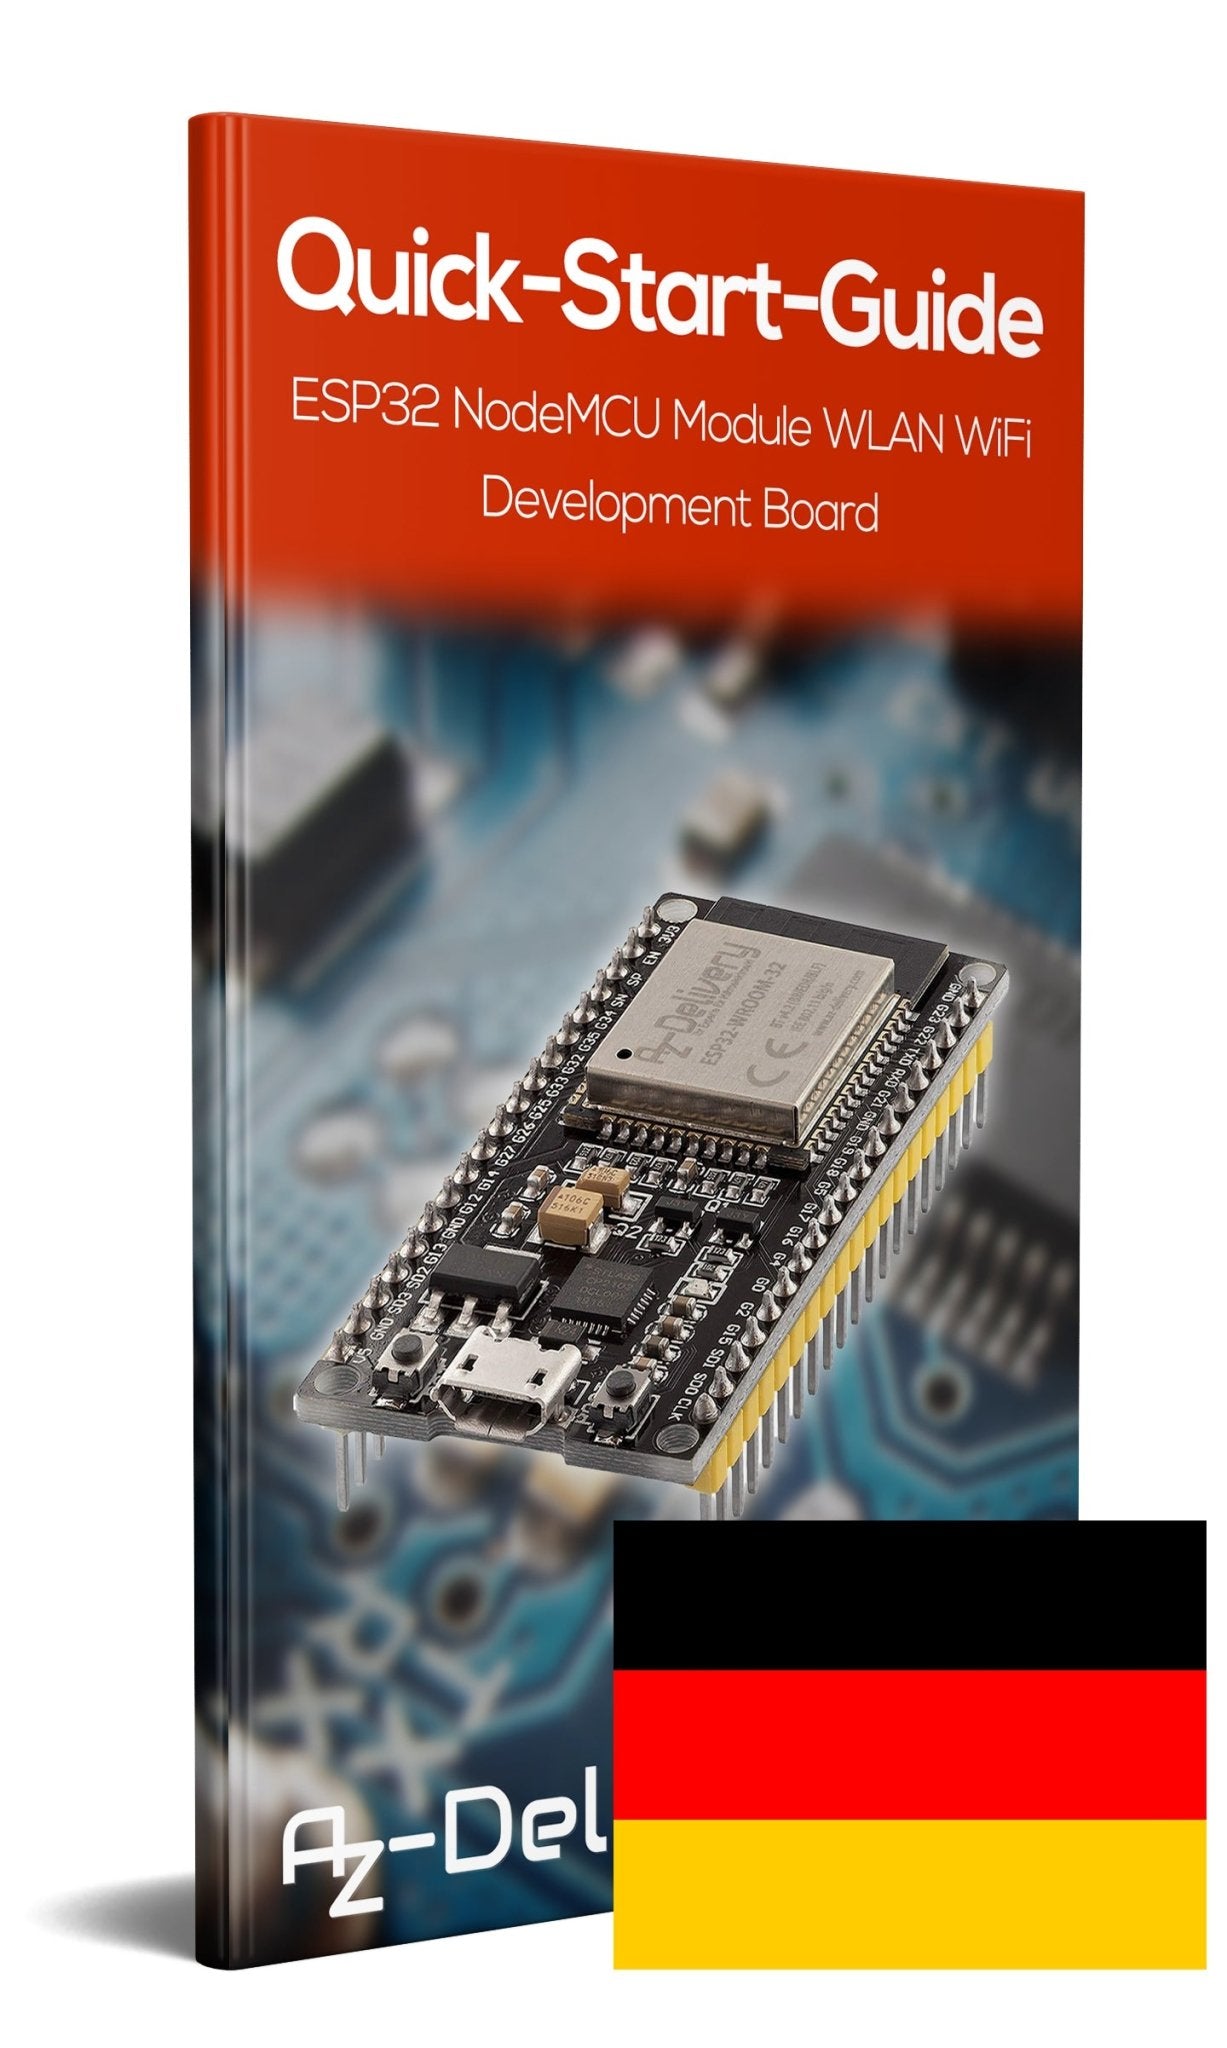 ESP32 NodeMCU Module WLAN WiFi Development Board mit CP2102 (Nachfolgermodell zum ESP8266) - AZ-Delivery